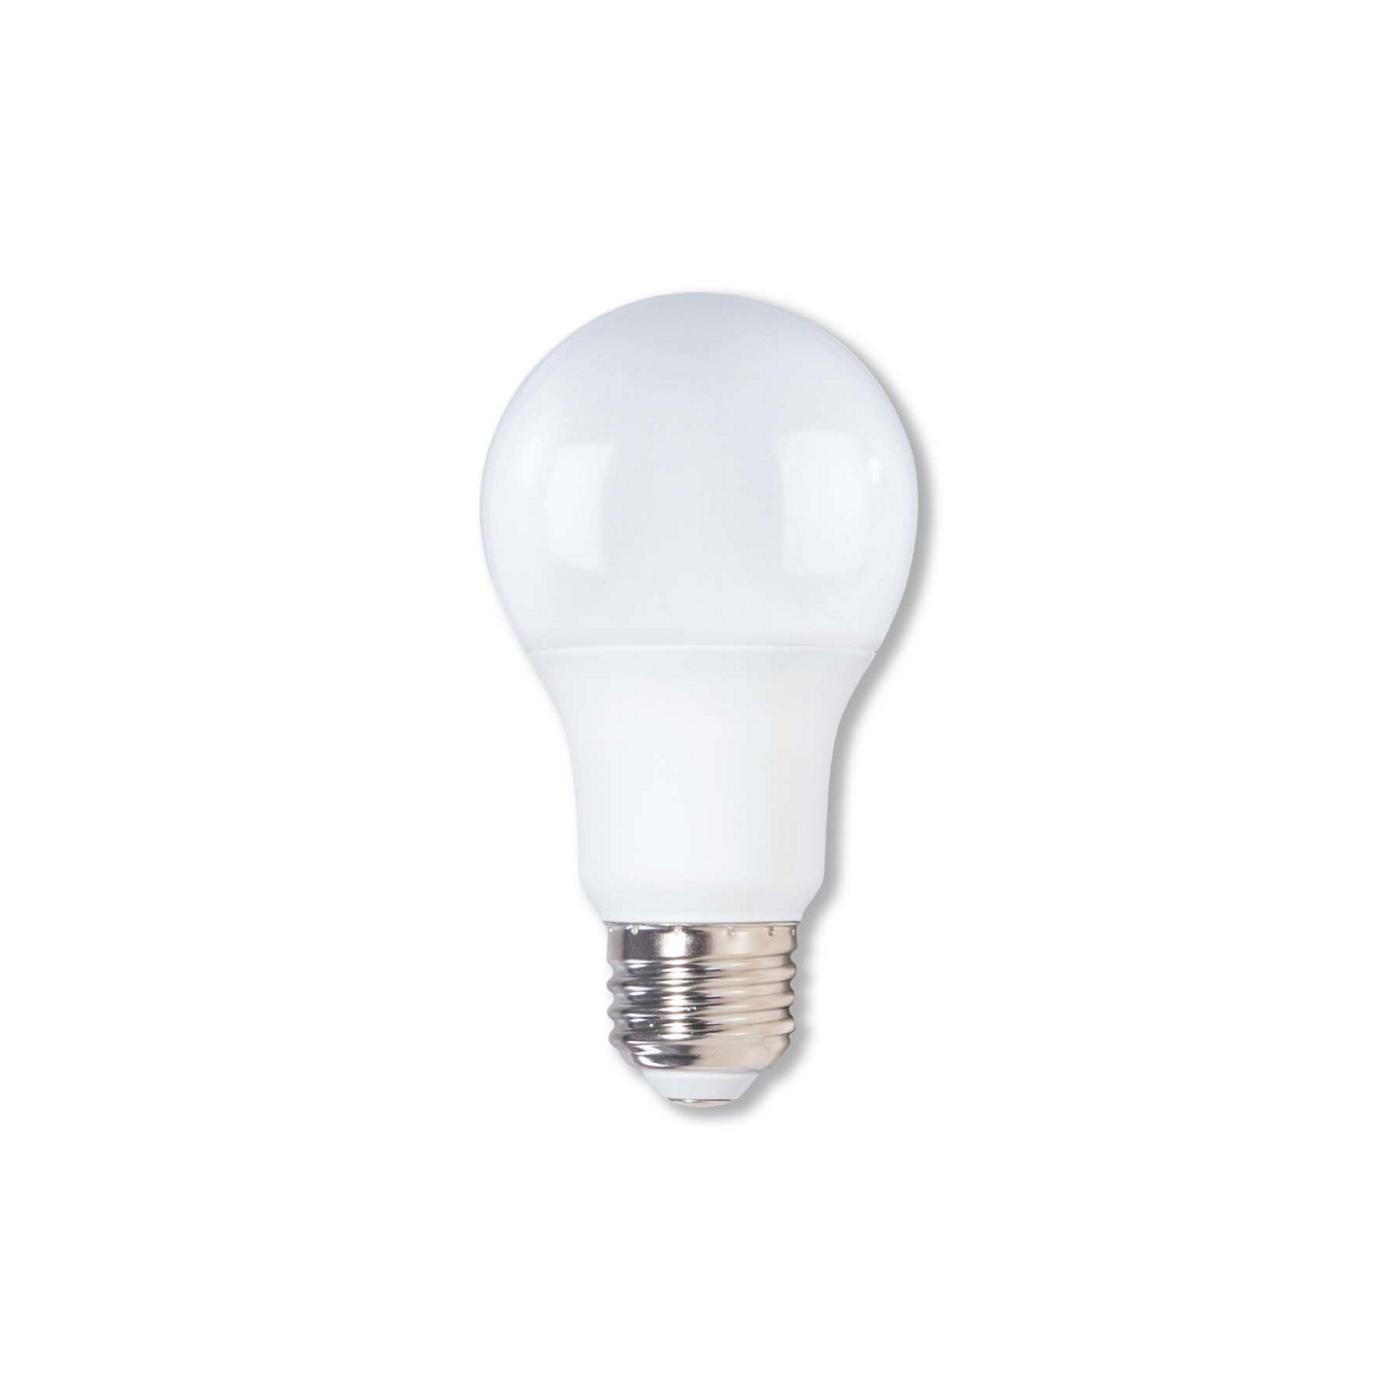 H-E-B Double Life A19 40-Watt LED Light Bulbs - Soft White; image 2 of 2